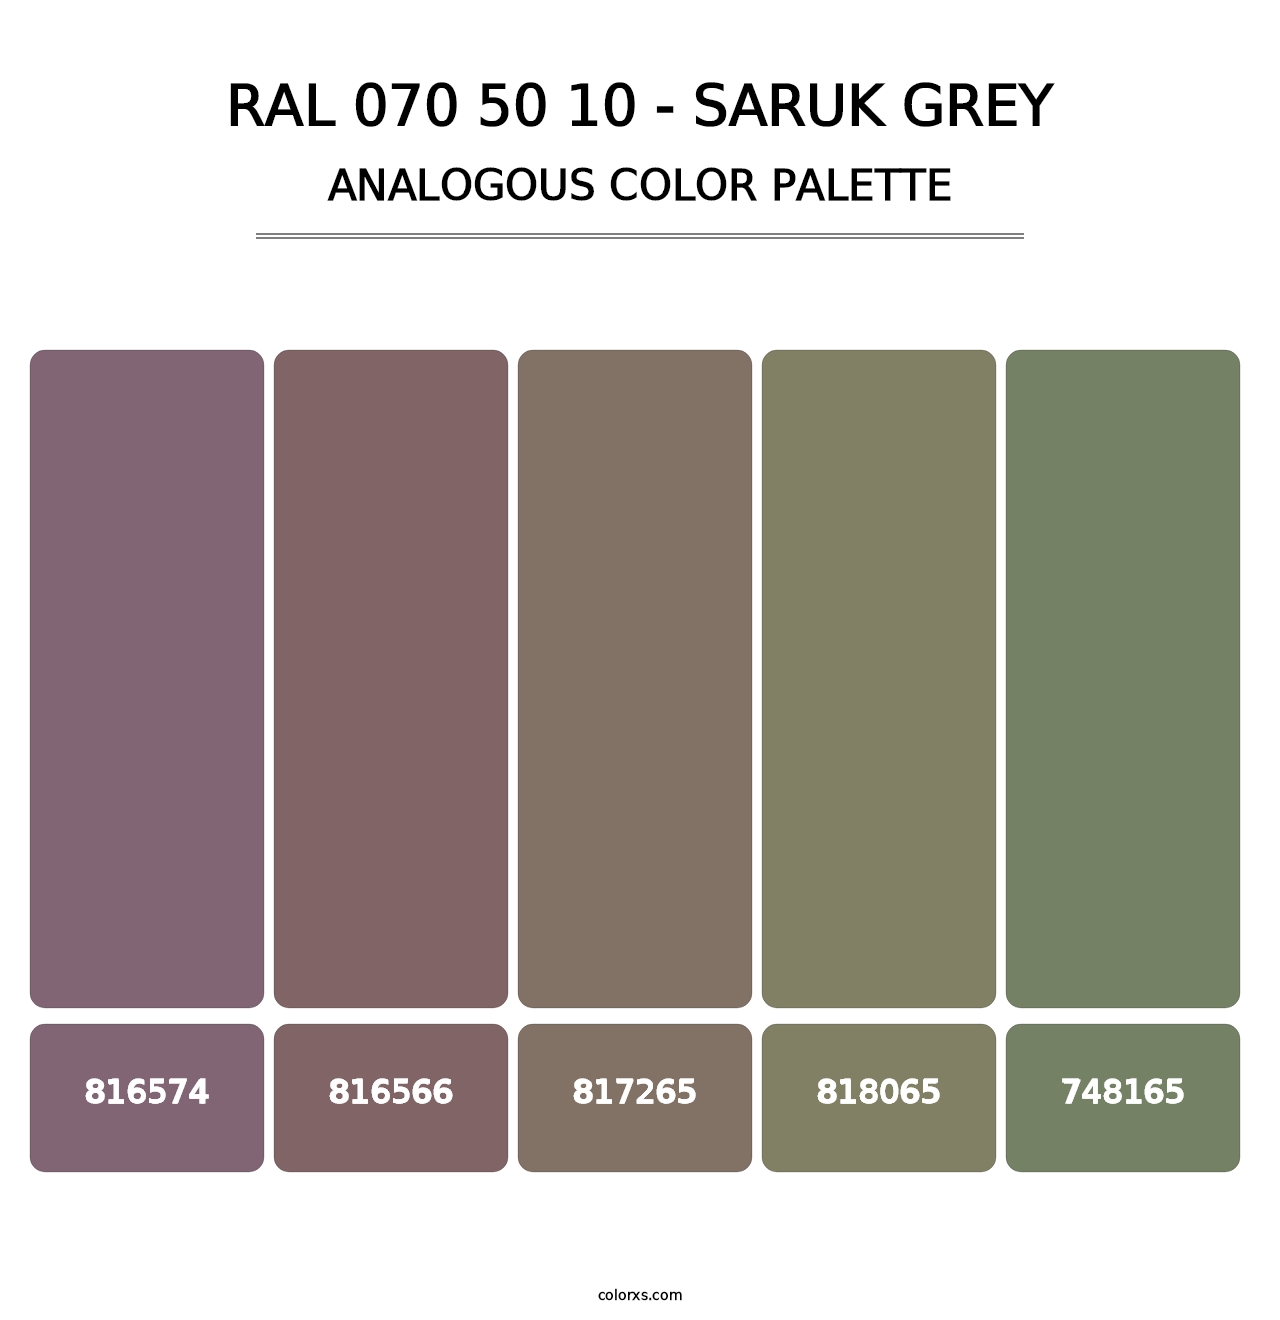 RAL 070 50 10 - Saruk Grey - Analogous Color Palette